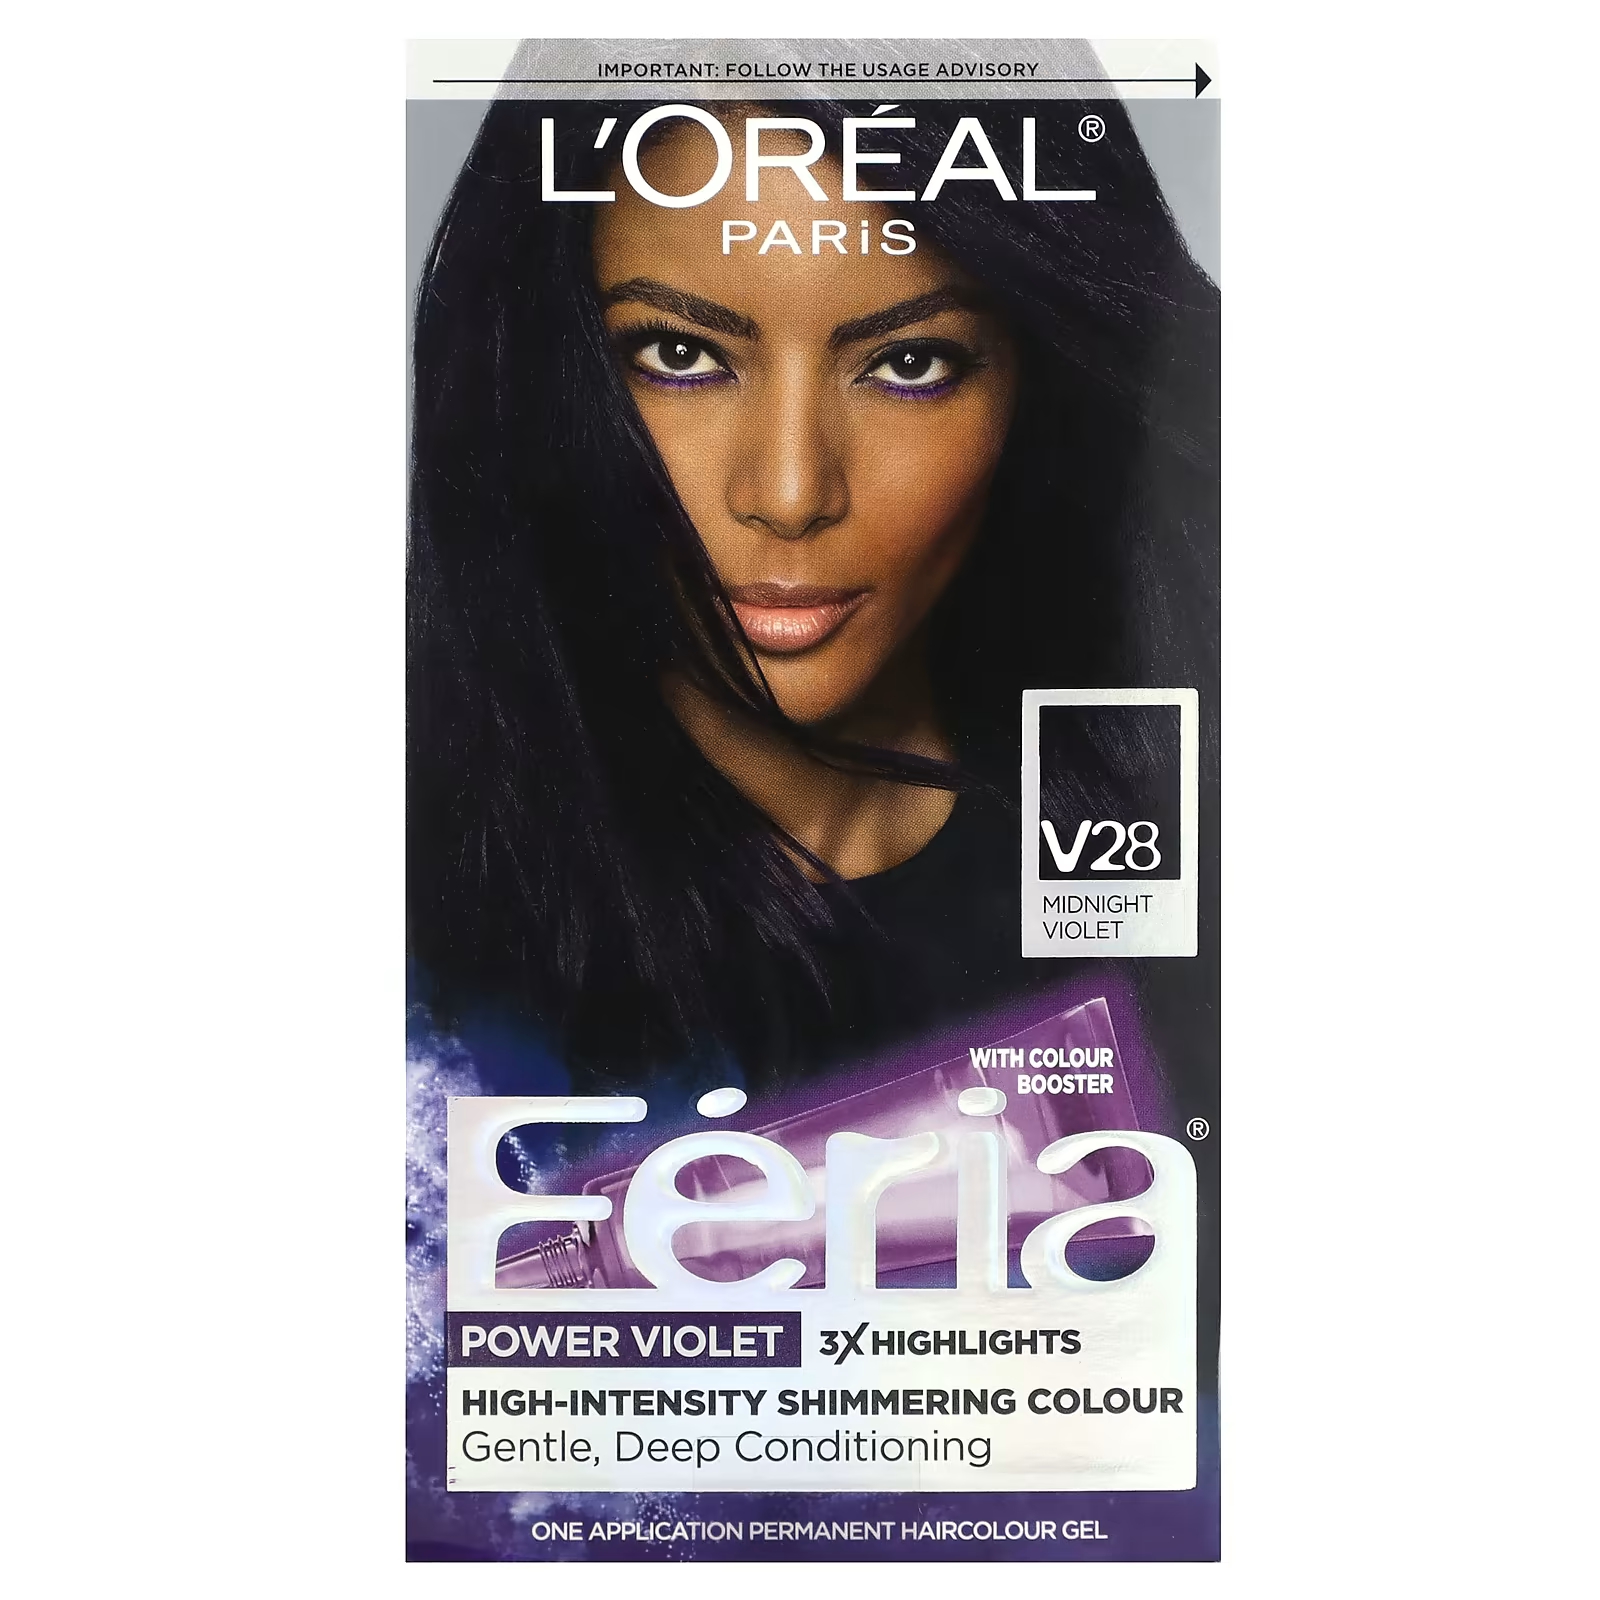 L'Oréal Feria Power Violet Интенсивный мерцающий цвет V28 Midnight Violet 1 применение